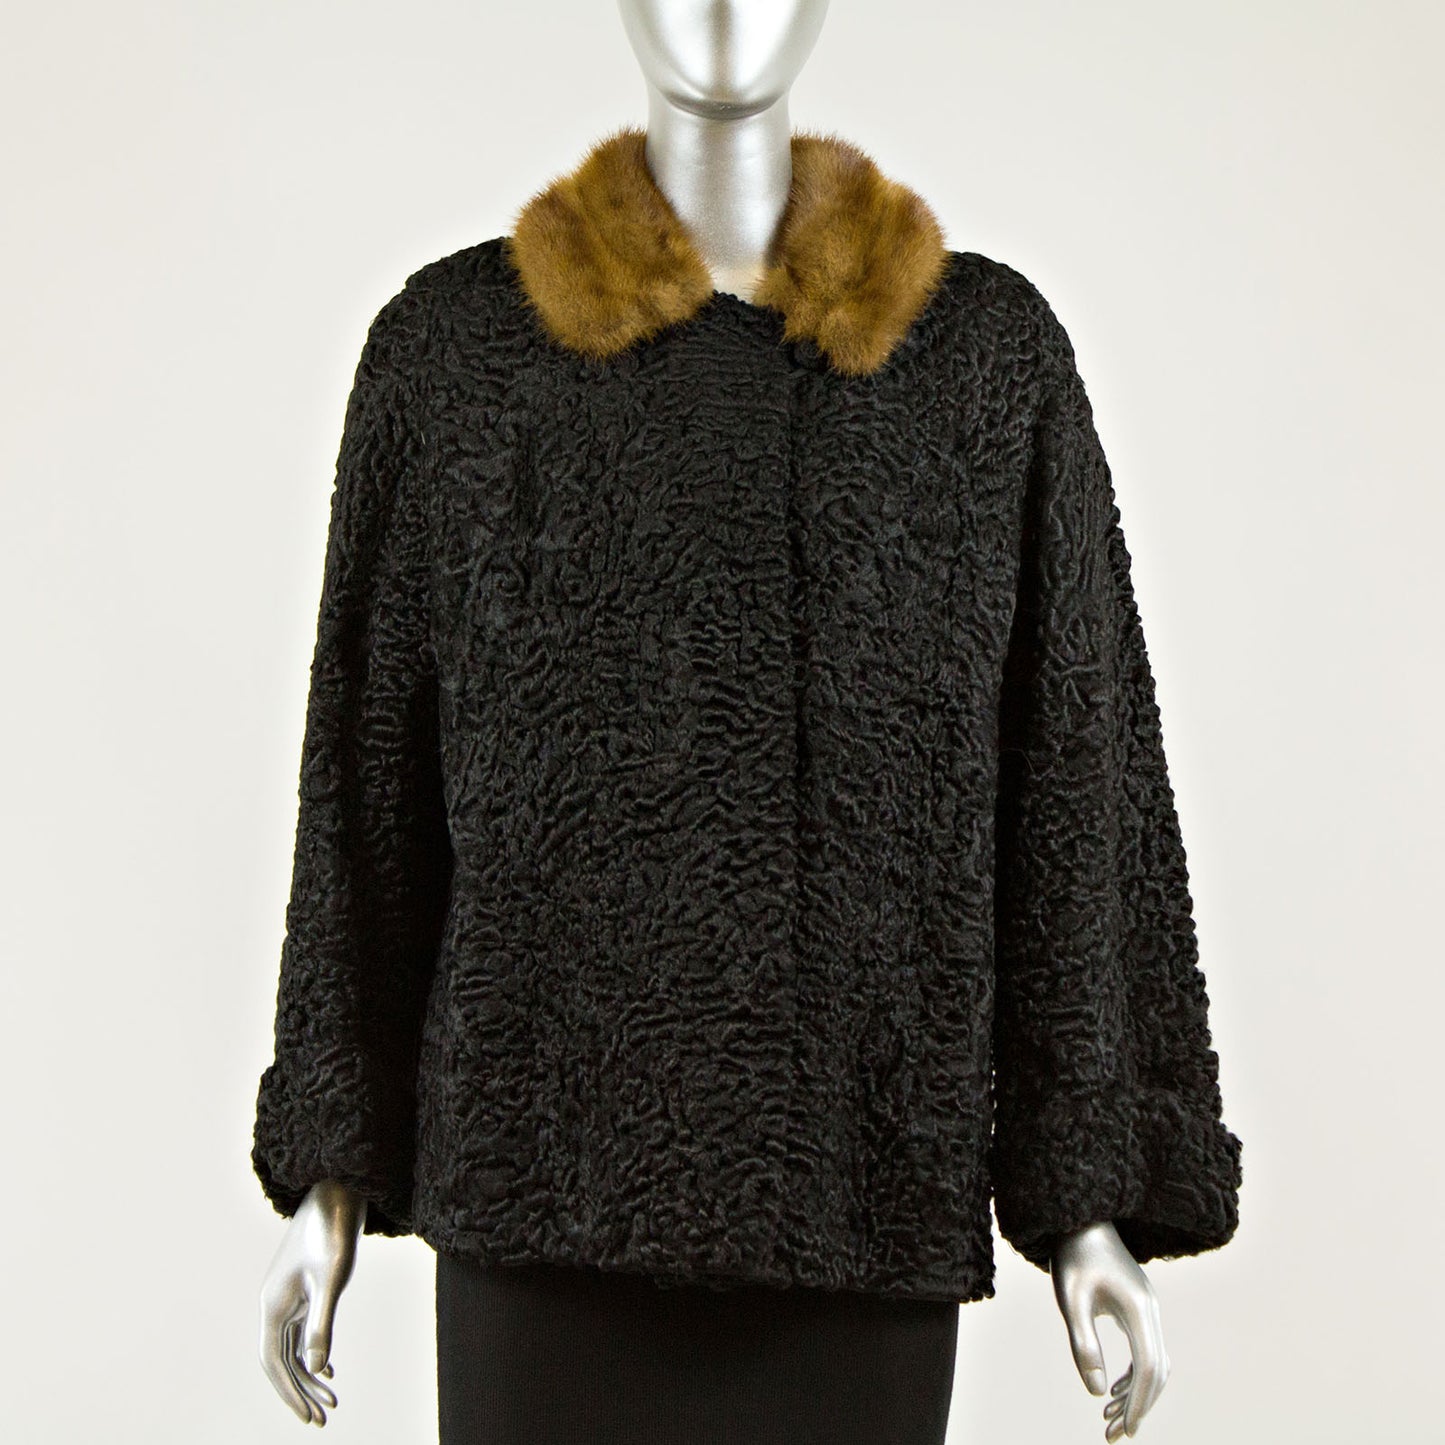 Black Persian Lamb with Mink Collar Jacket - Size S (Vintage Furs)